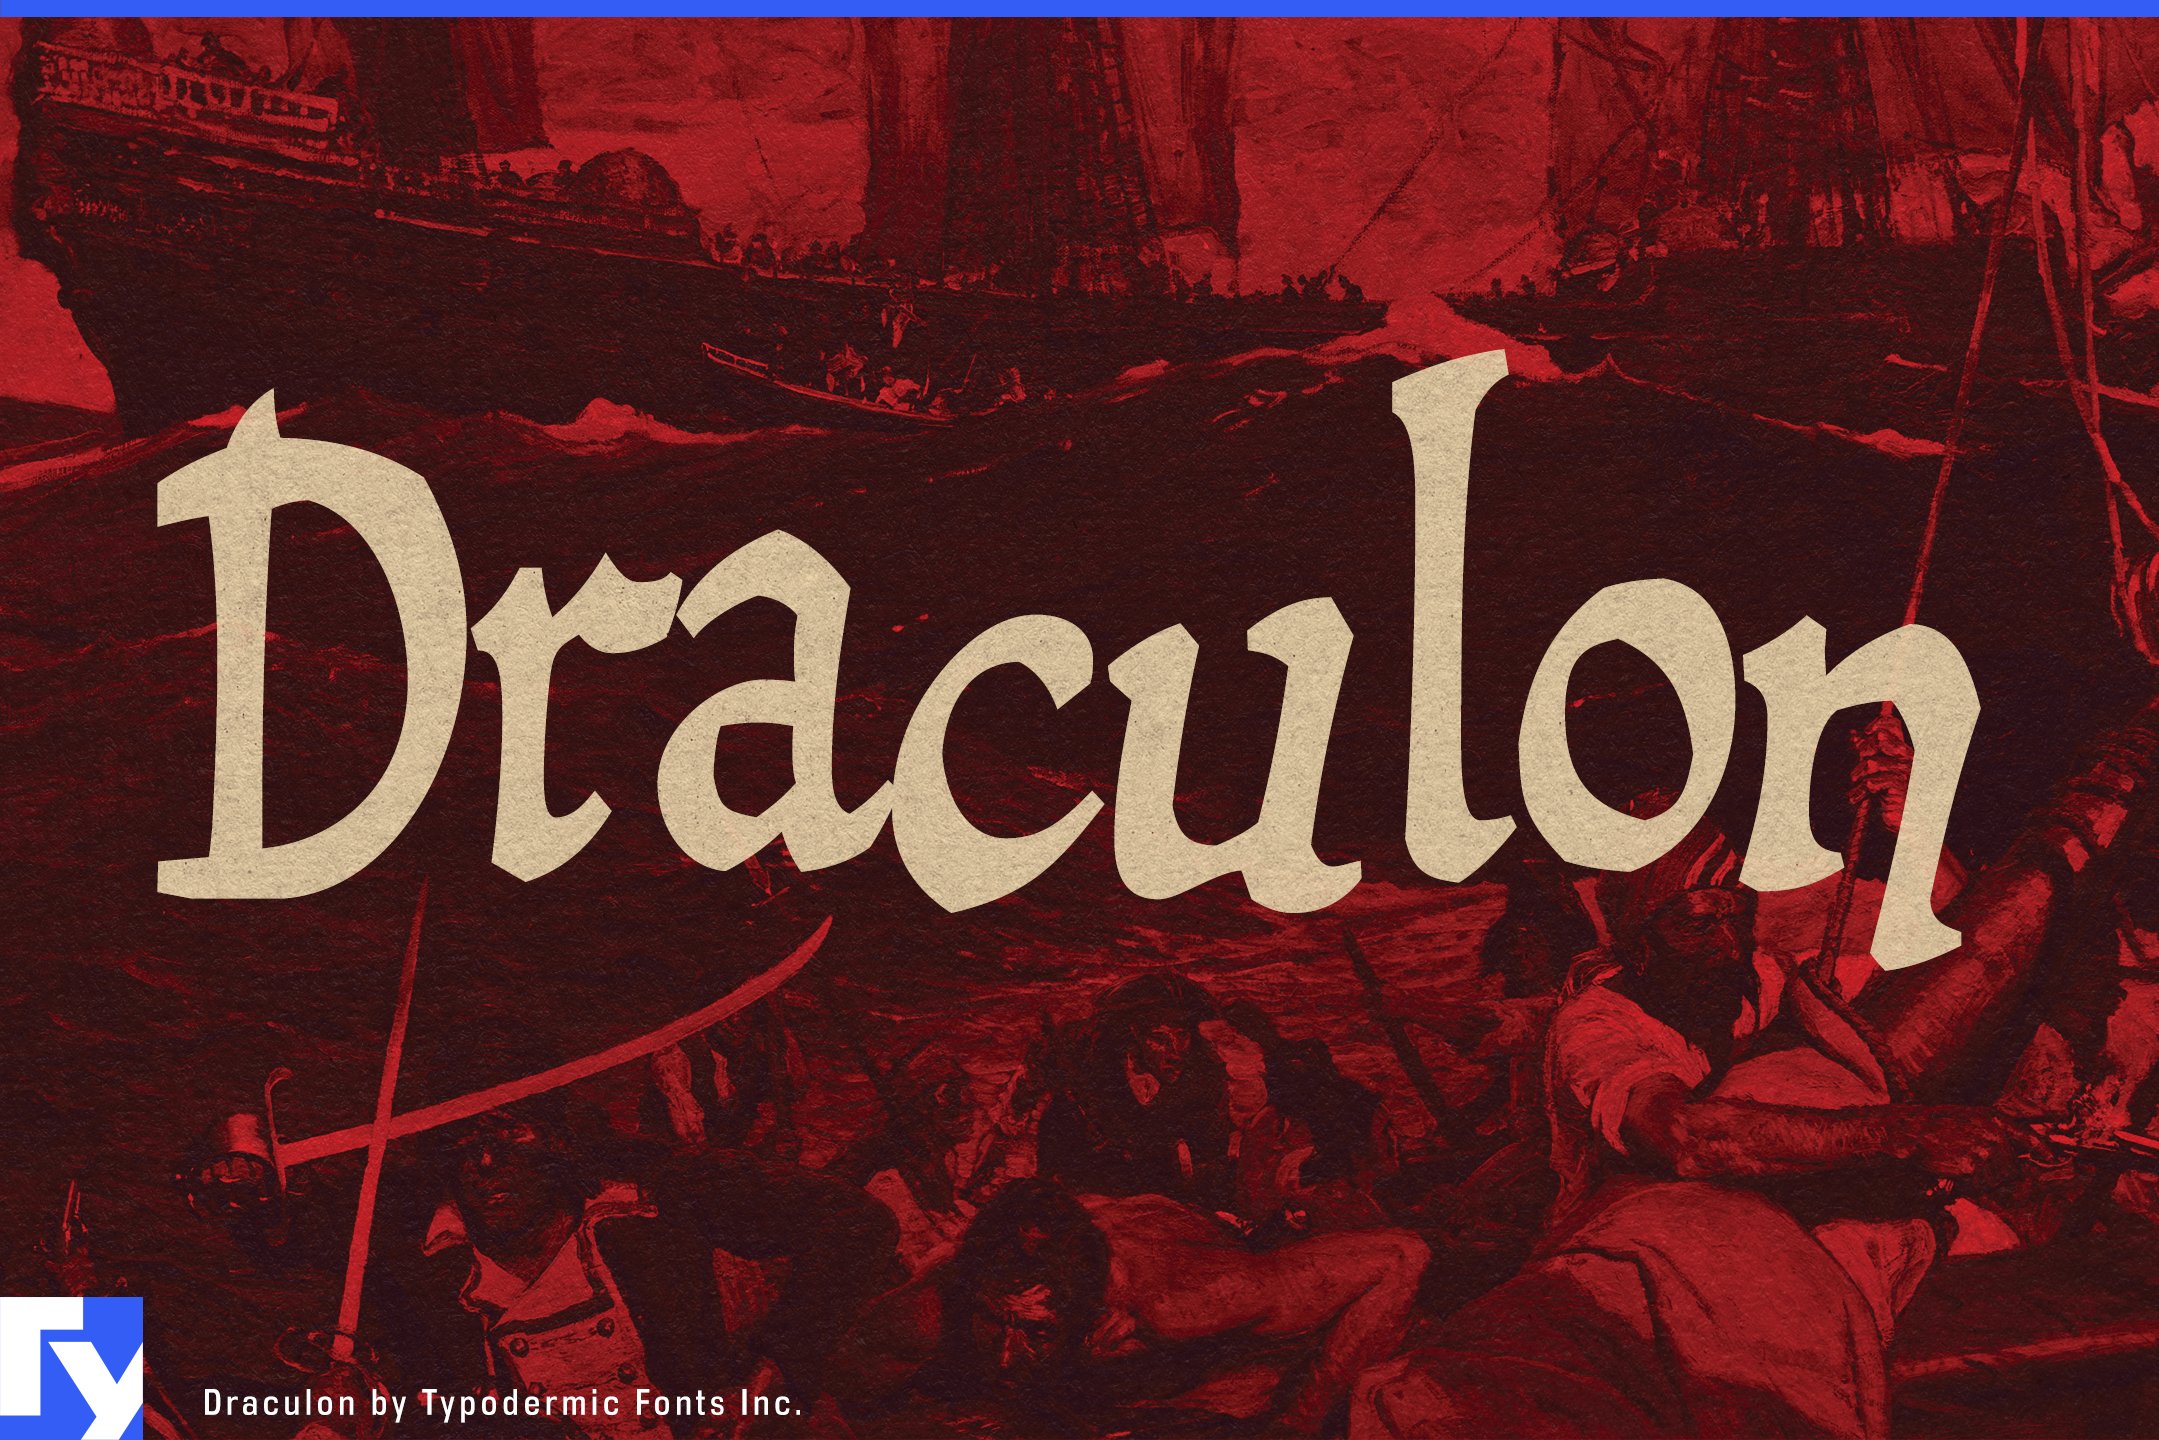 Draculon cover image.